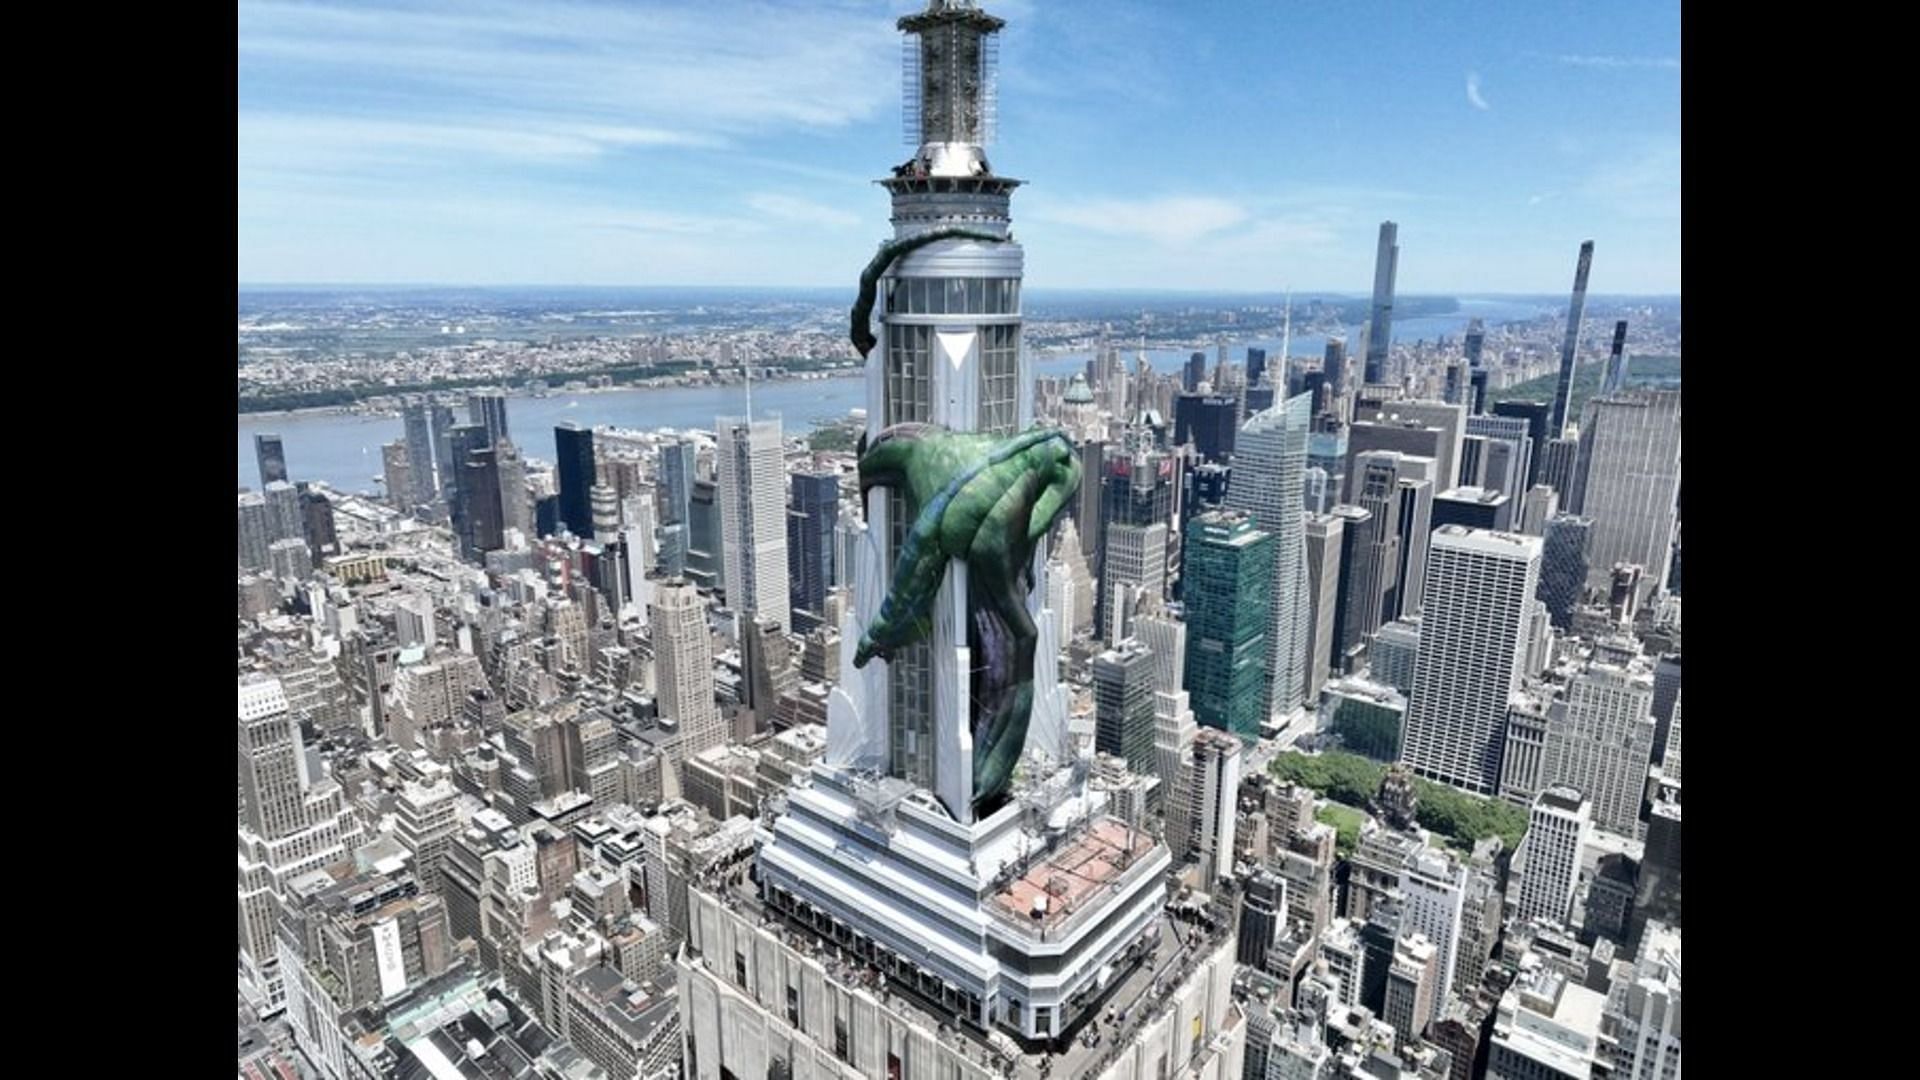 The Vhagar replica on Empire State Building (Image by @EmpireStateBldg on X)